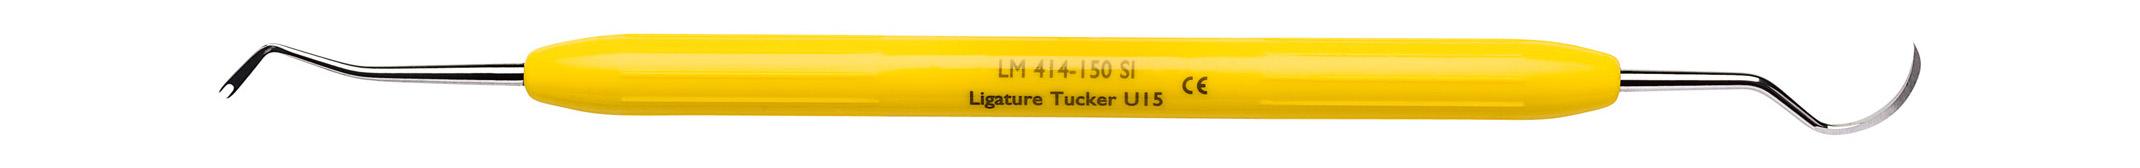 Ligature Tucker-Scaler U15